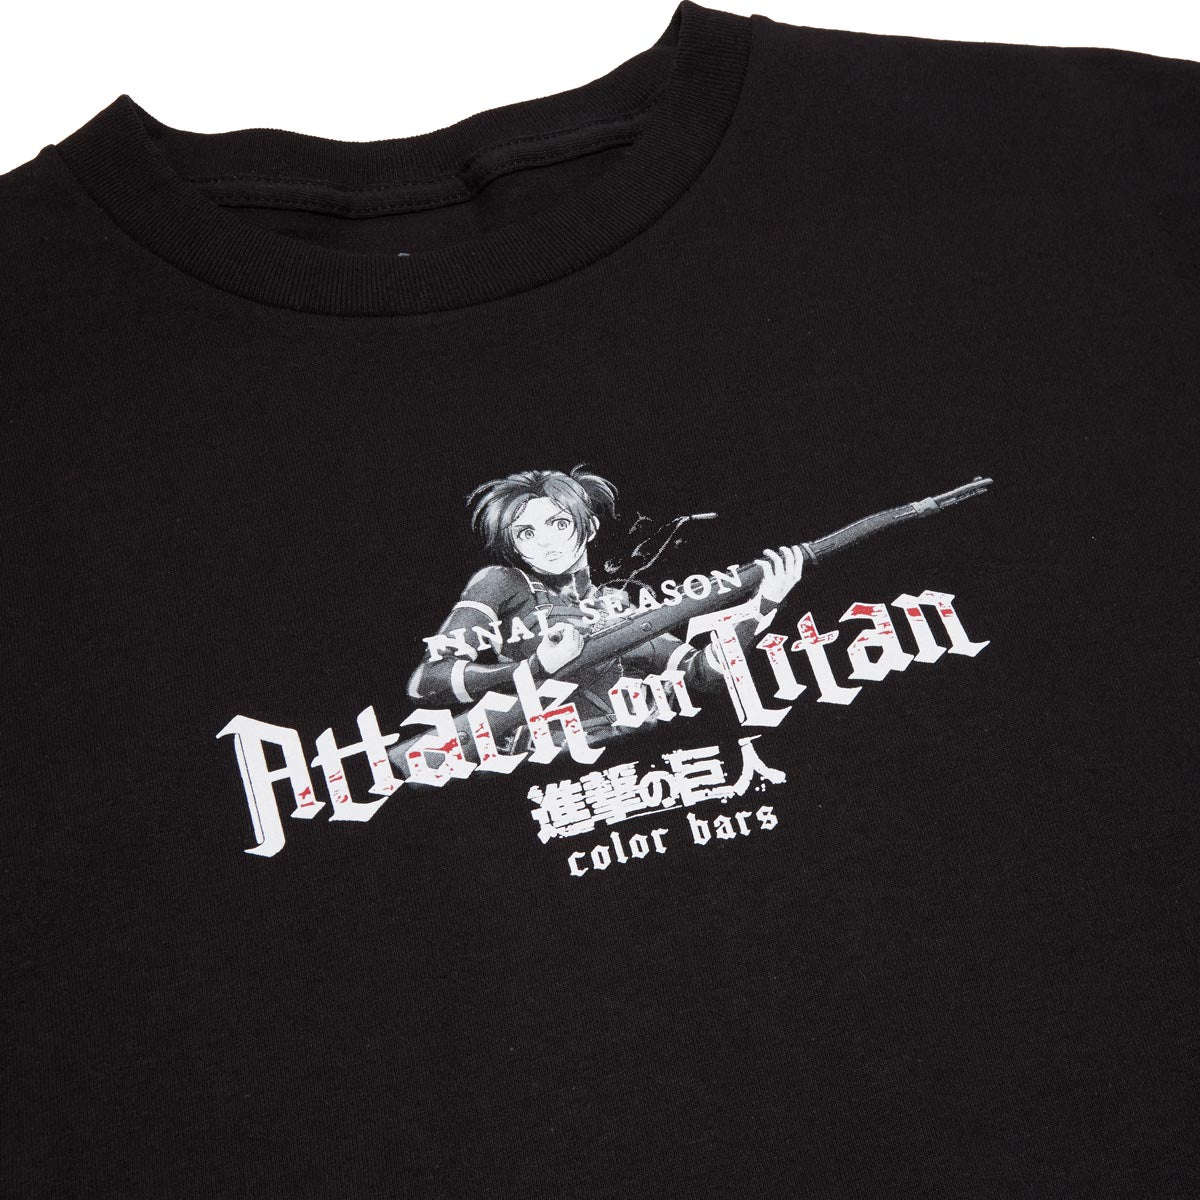 Color Bars x Attack on Titan Loaded T-Shirt - Black image 2